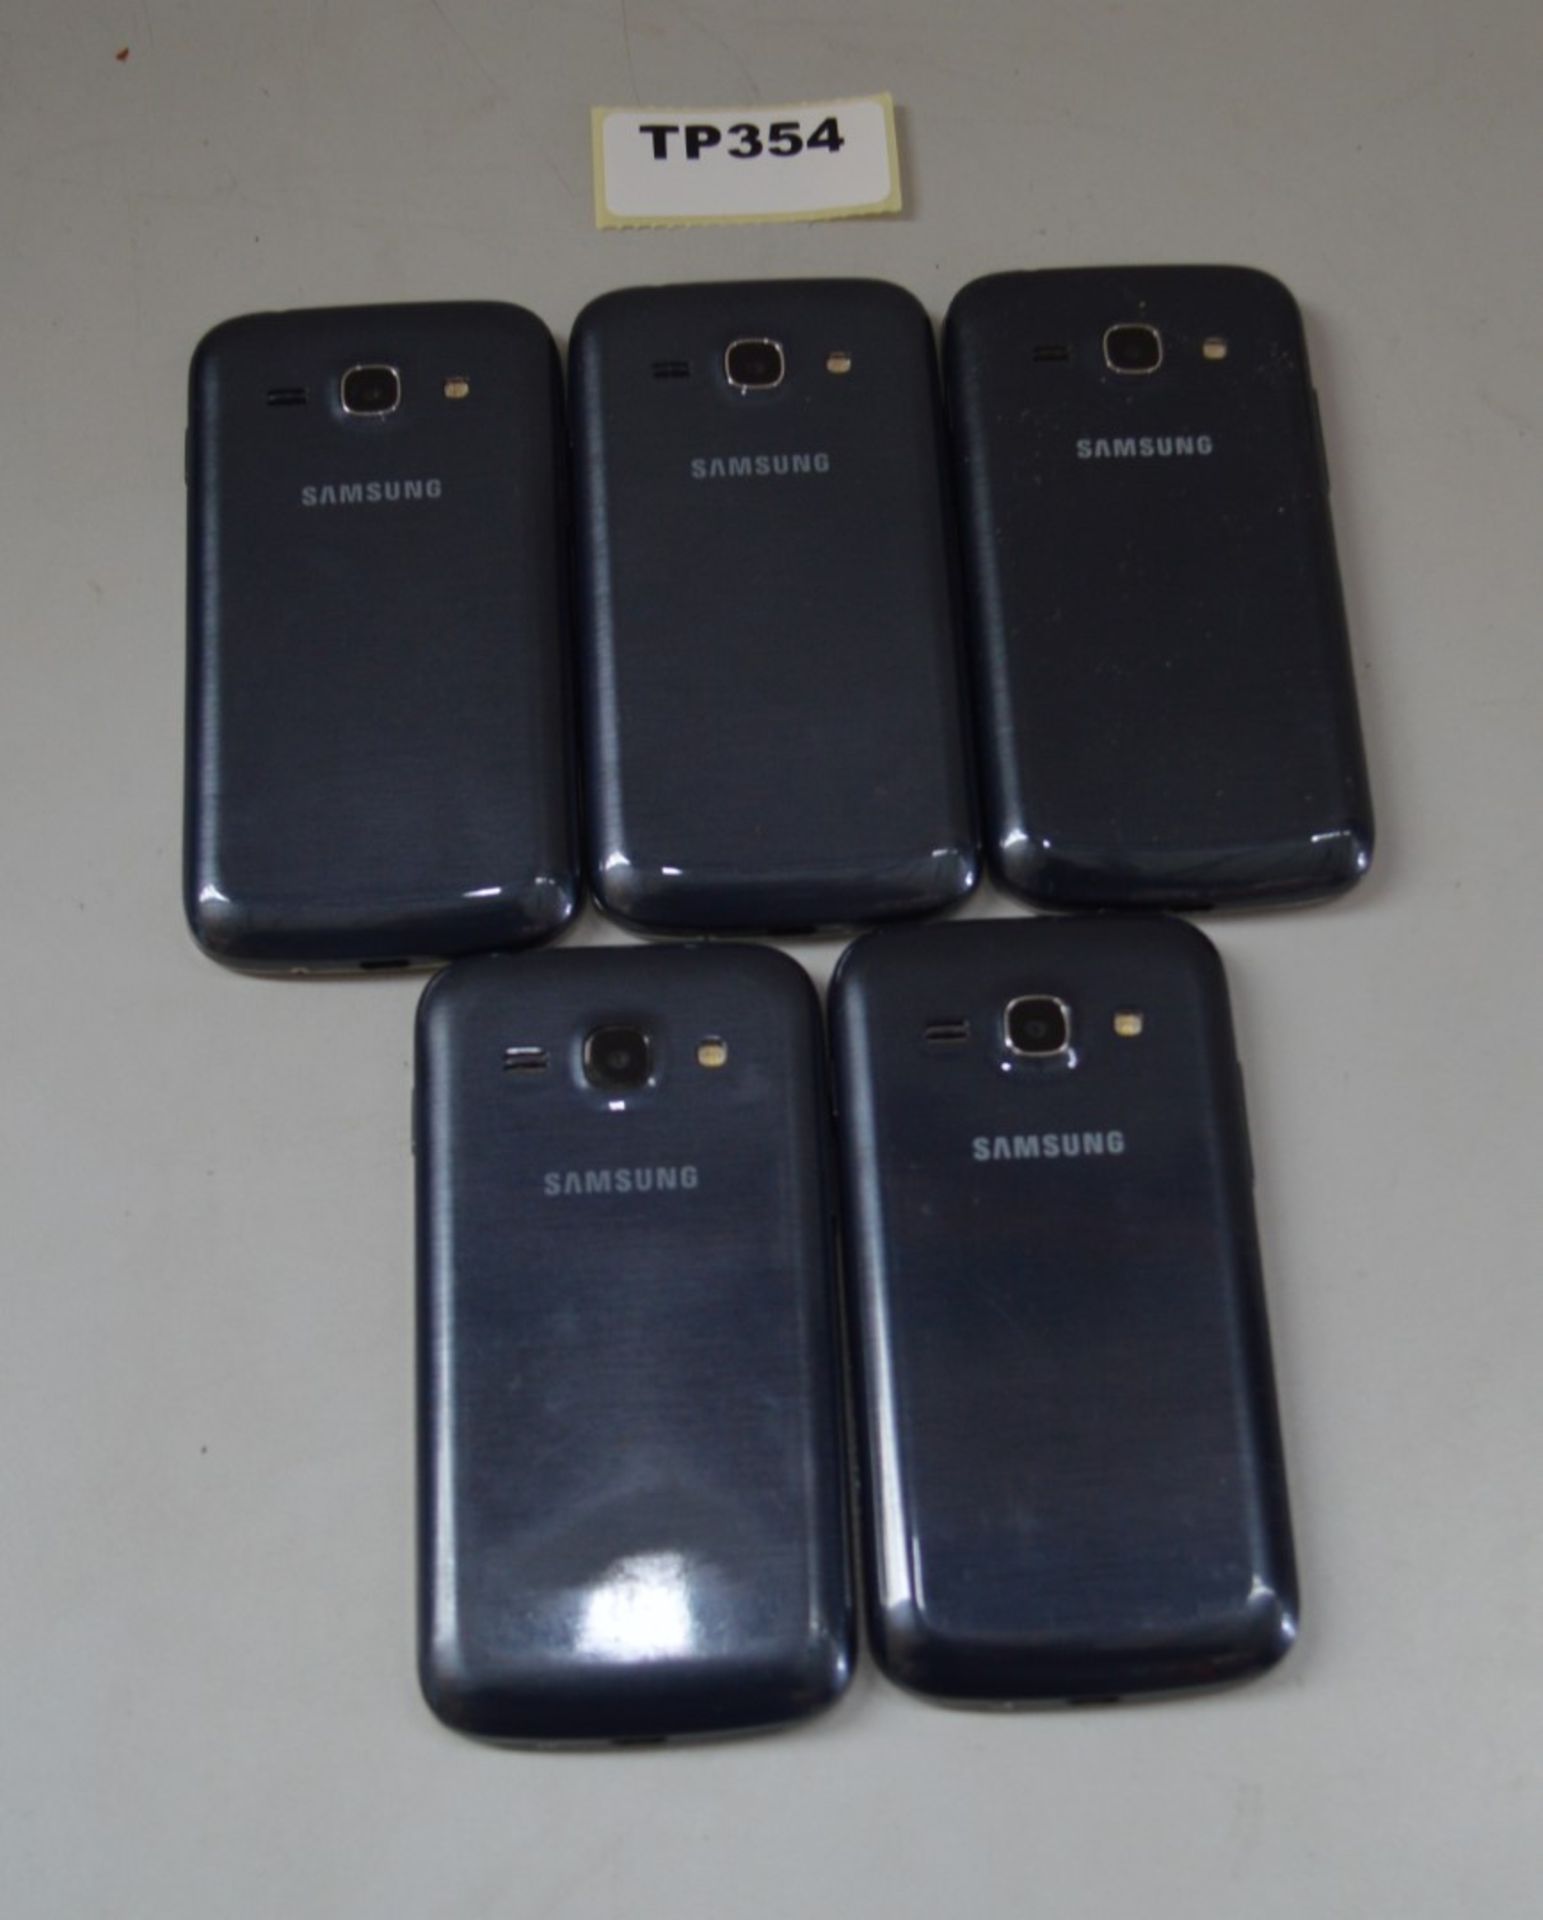 1 x Joblot of 5 Samsung Galaxy Ace 3 GT-S7275R Smartphones - Ref TP354 - Image 2 of 3